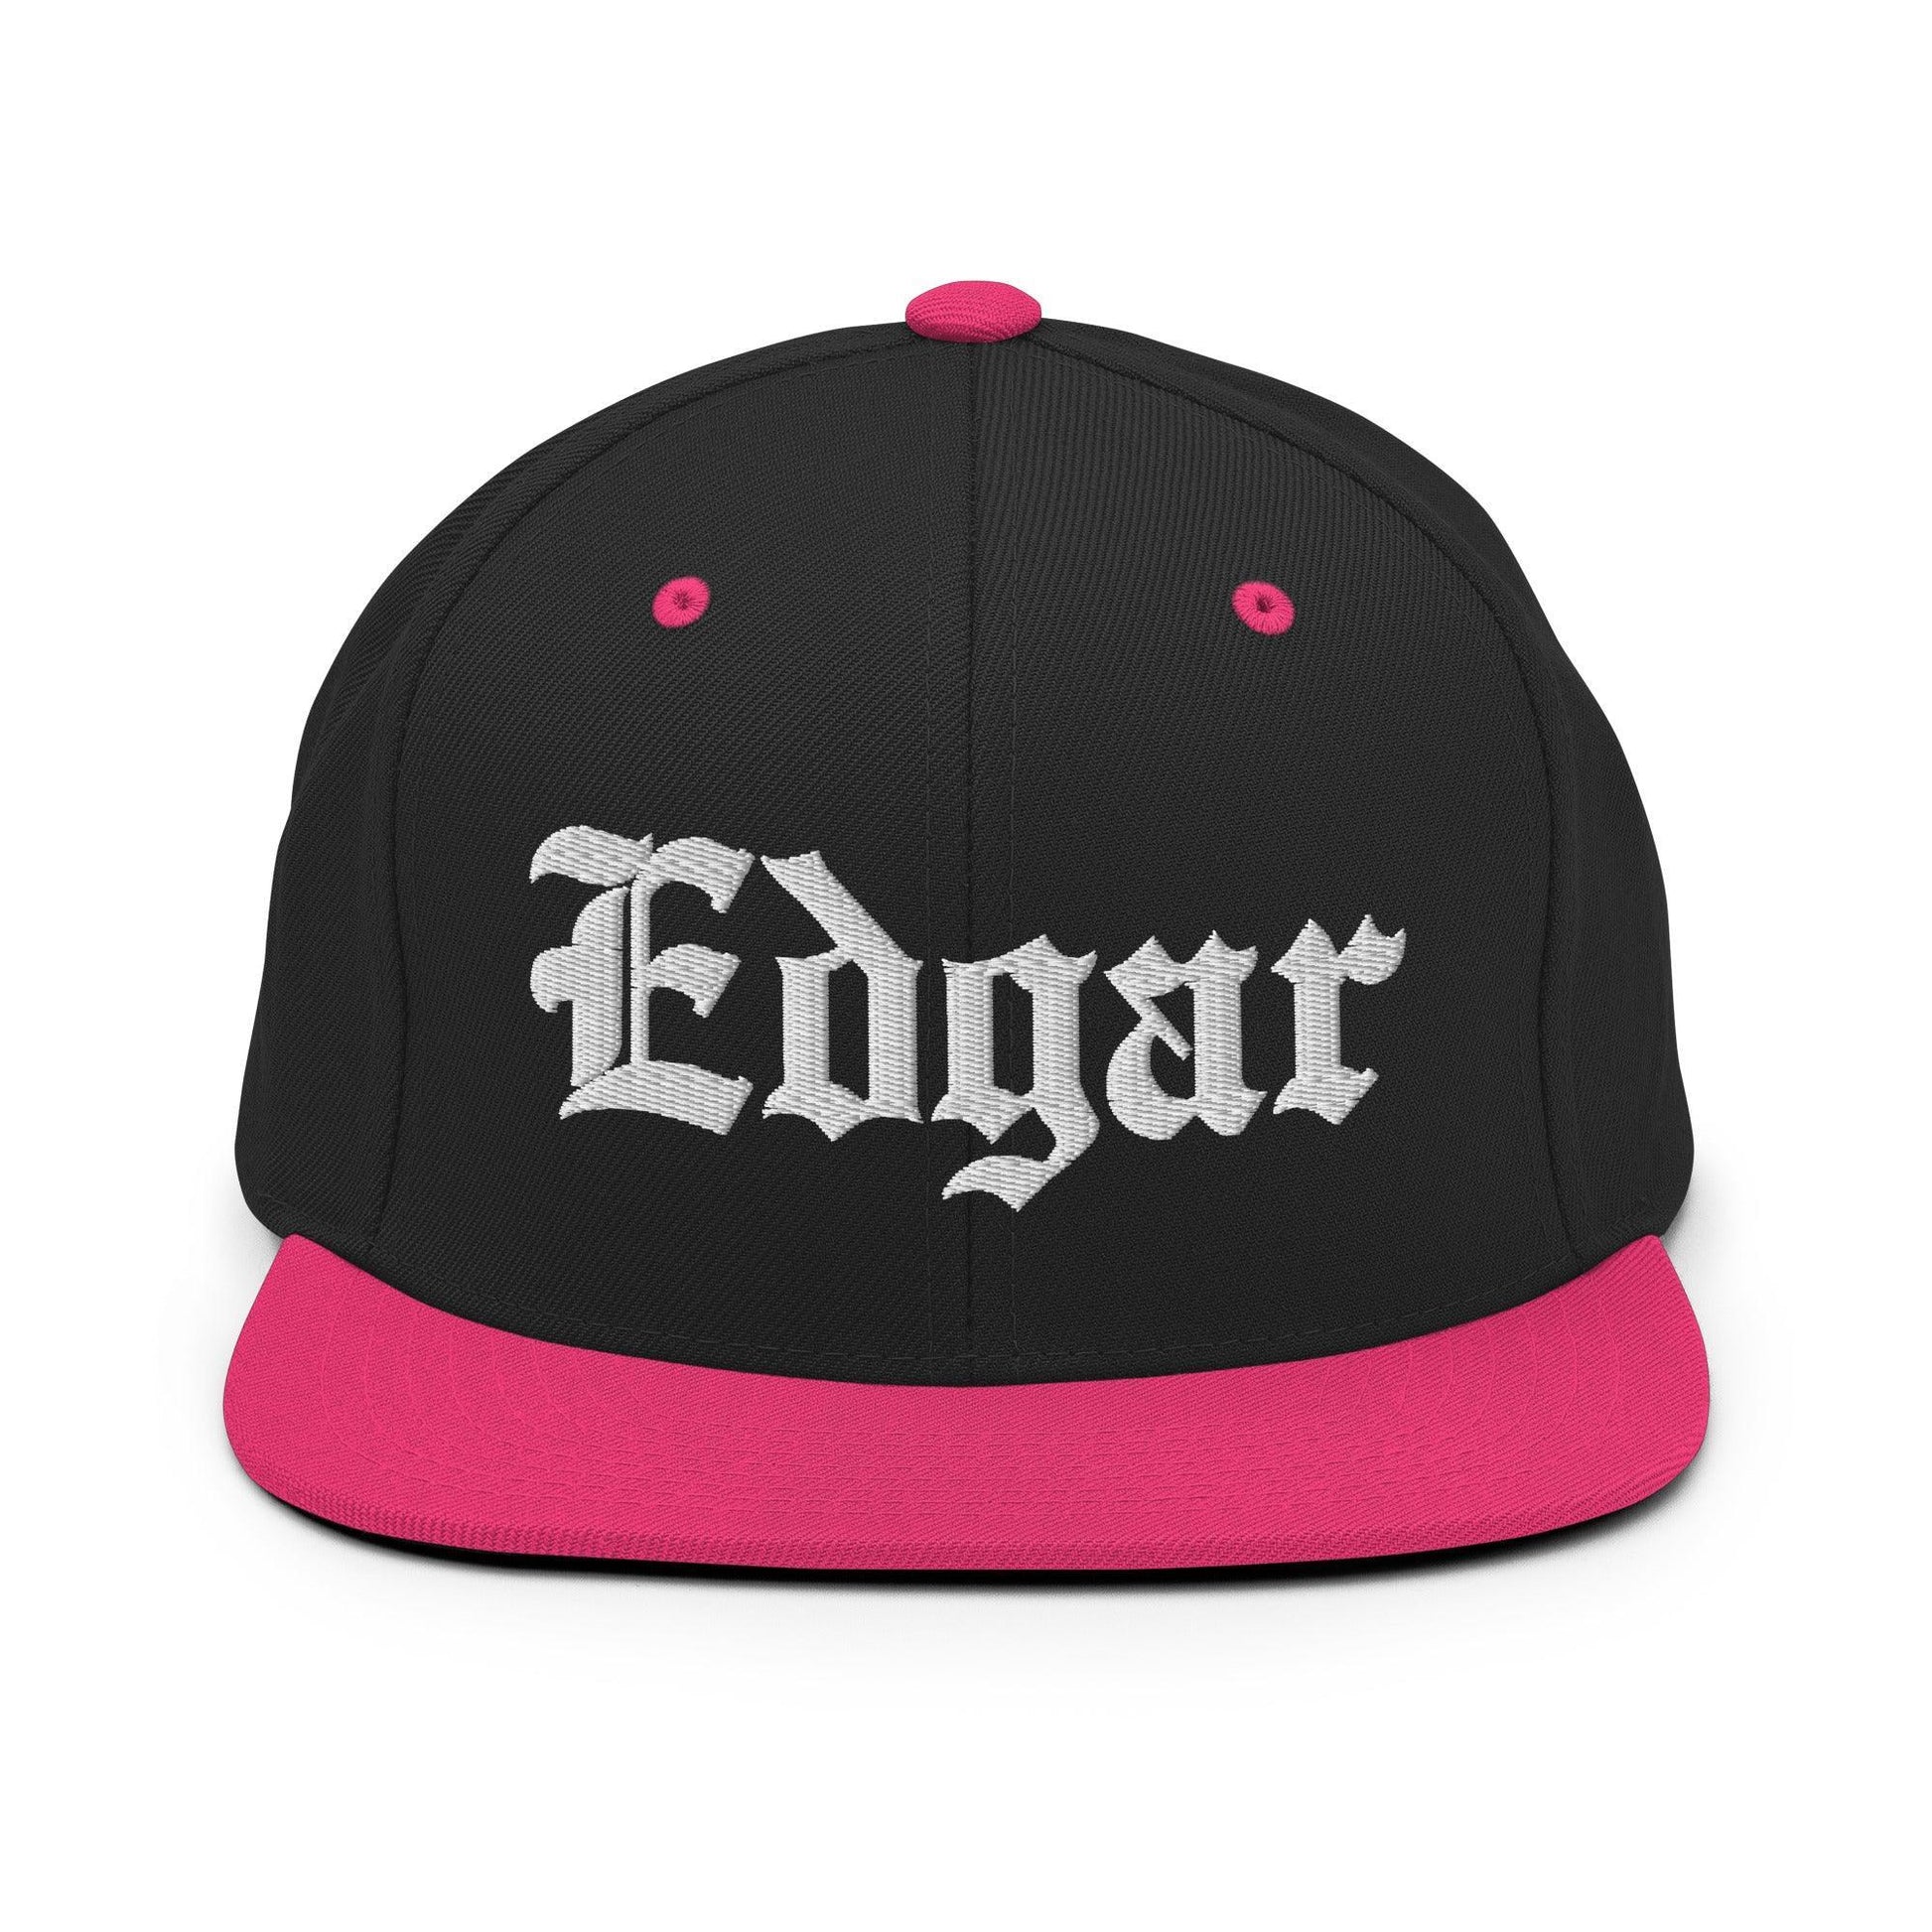 Edgar Old English Snapback Hat Black/ Neon Pink